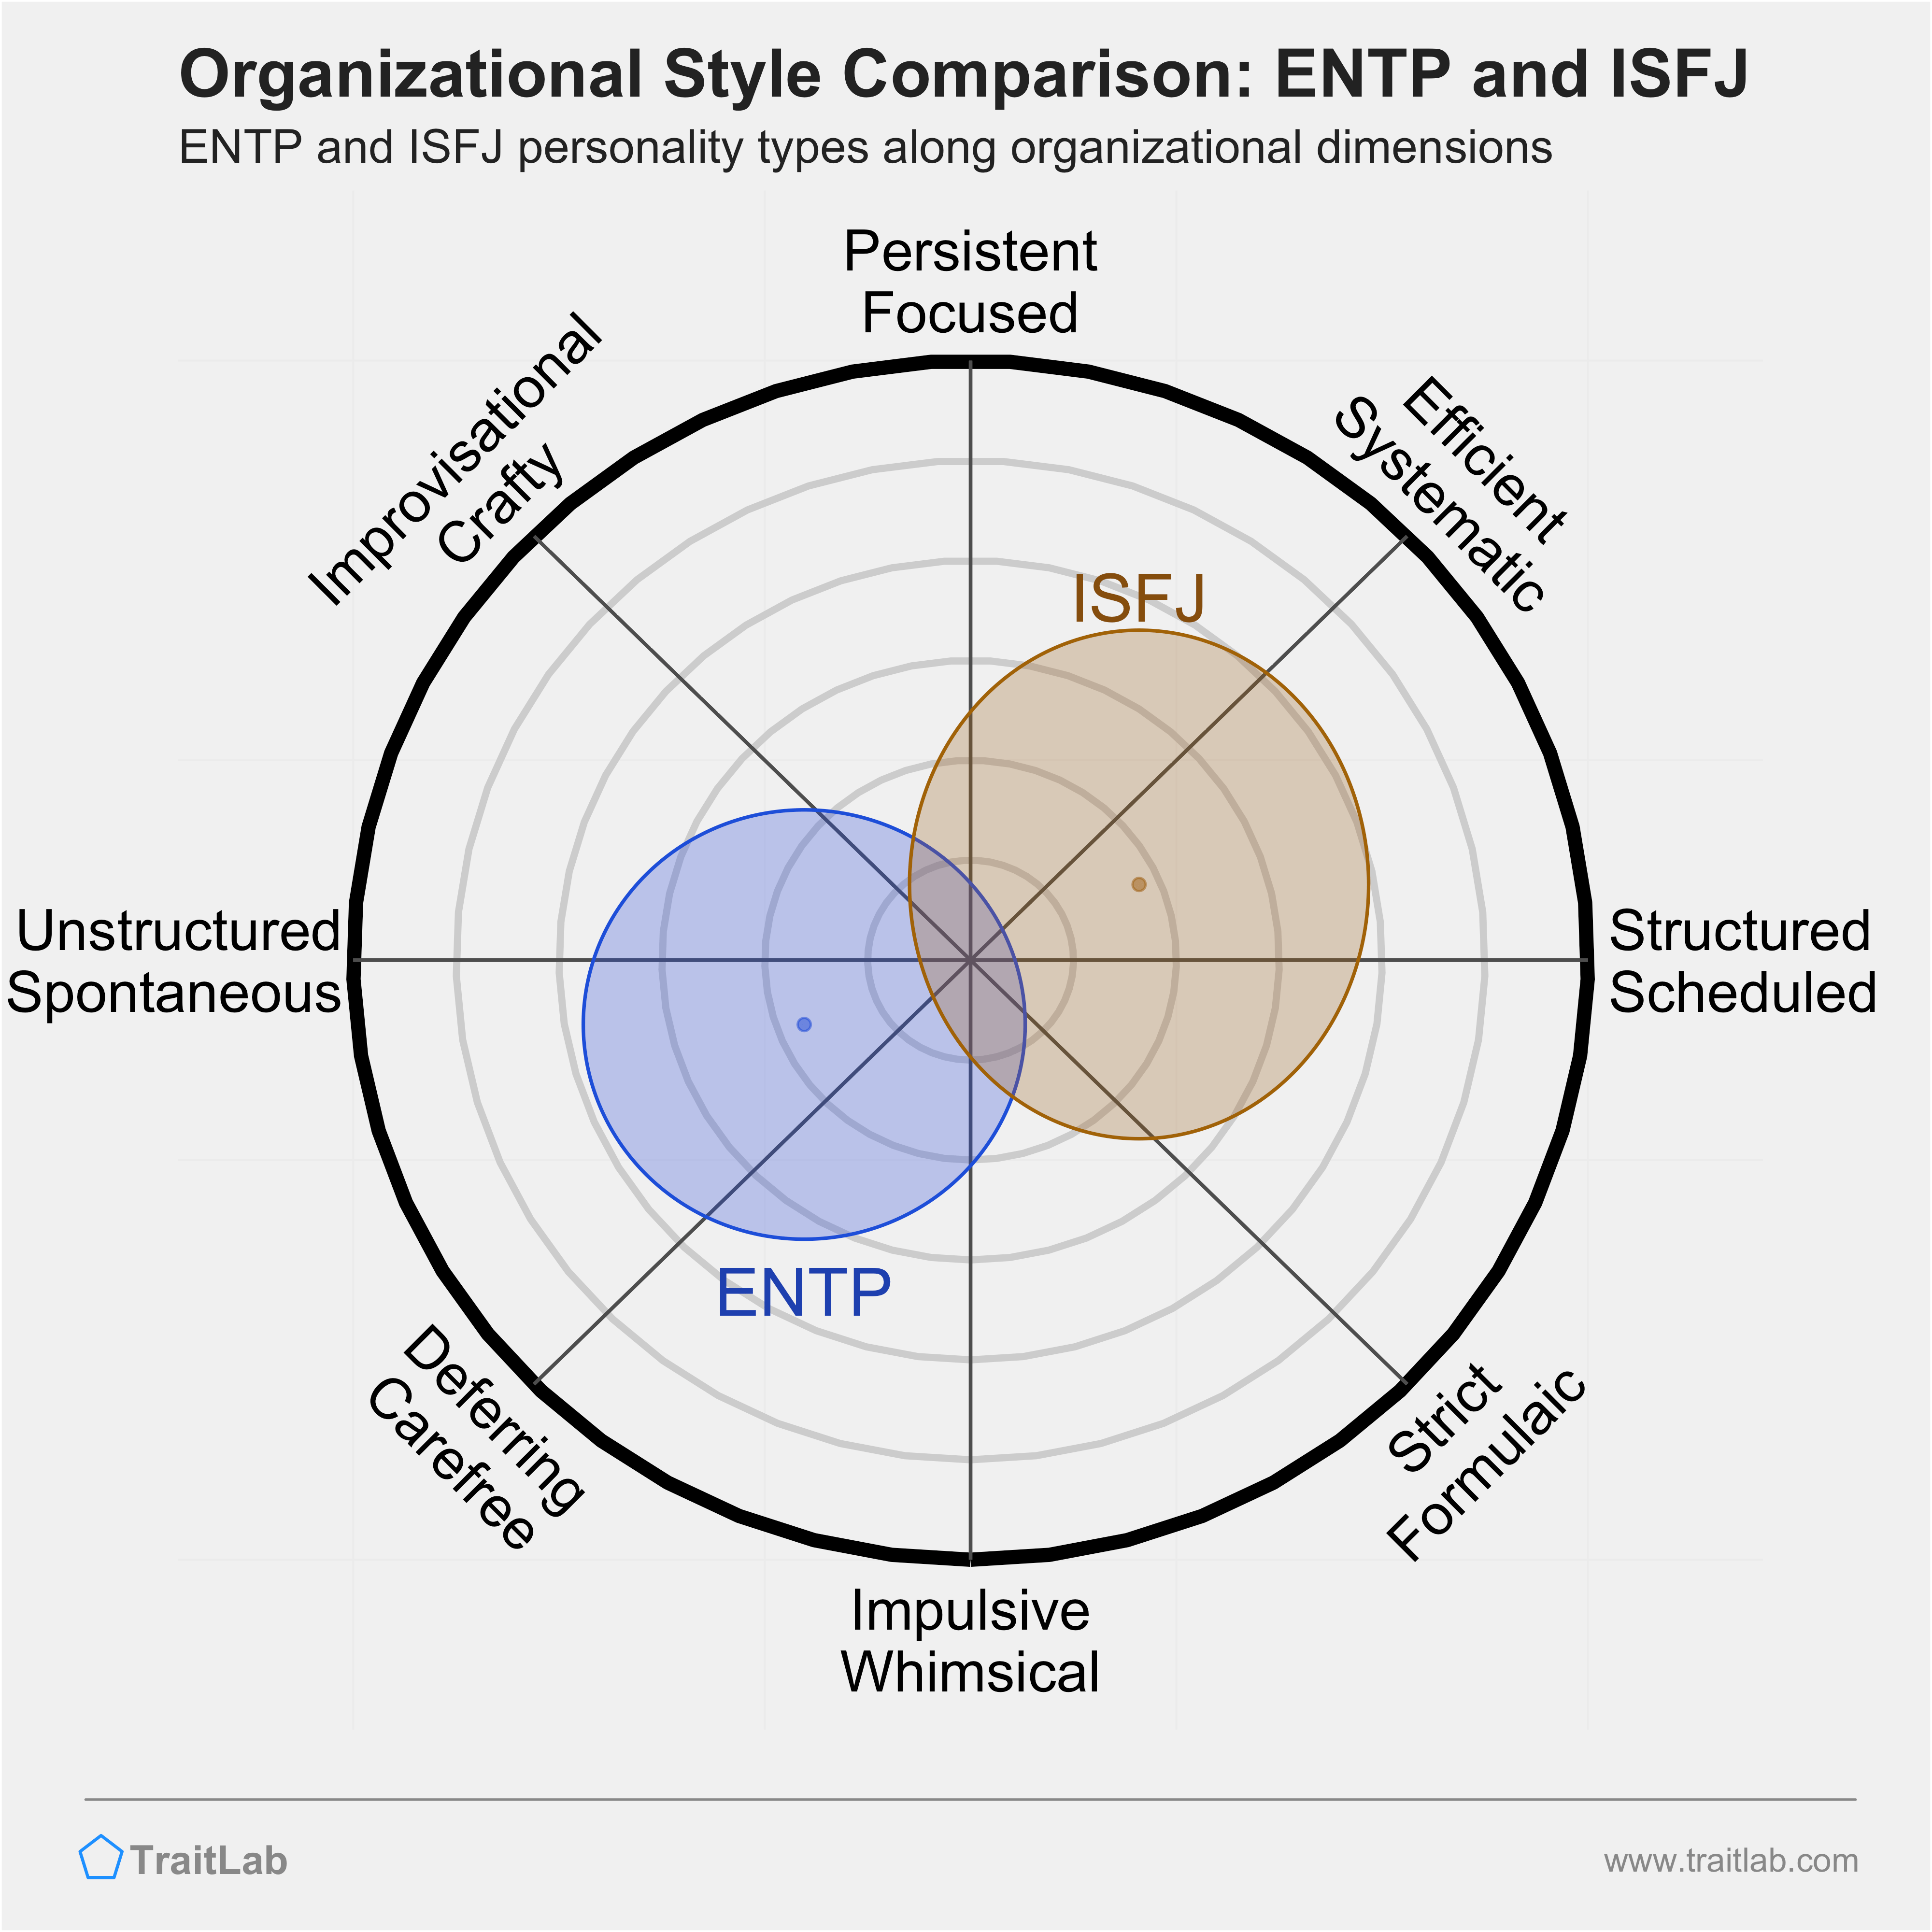 ENTP and ISFJ comparison across organizational dimensions